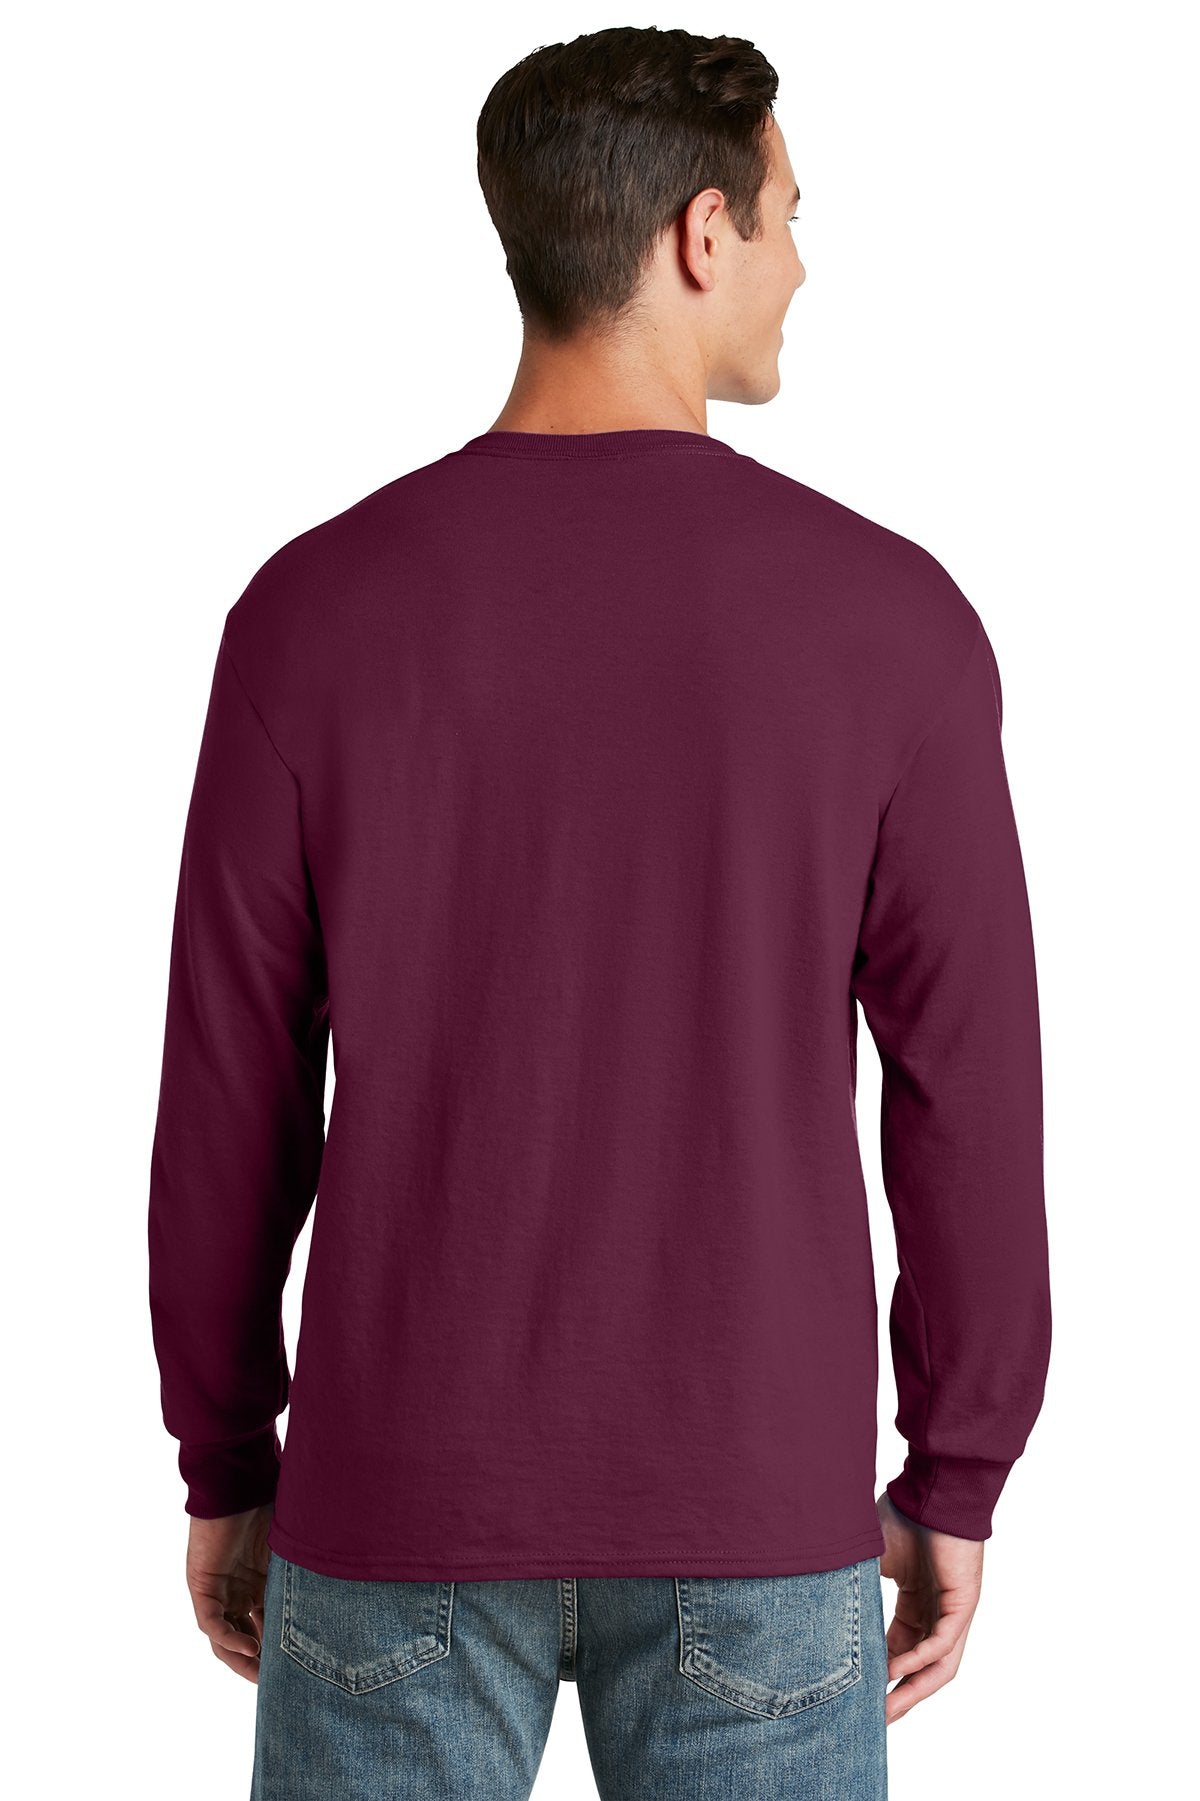 Jerzees Dri-Power 50/50 Cotton/Poly Long Sleeve T-Shirt 29LS Maroon